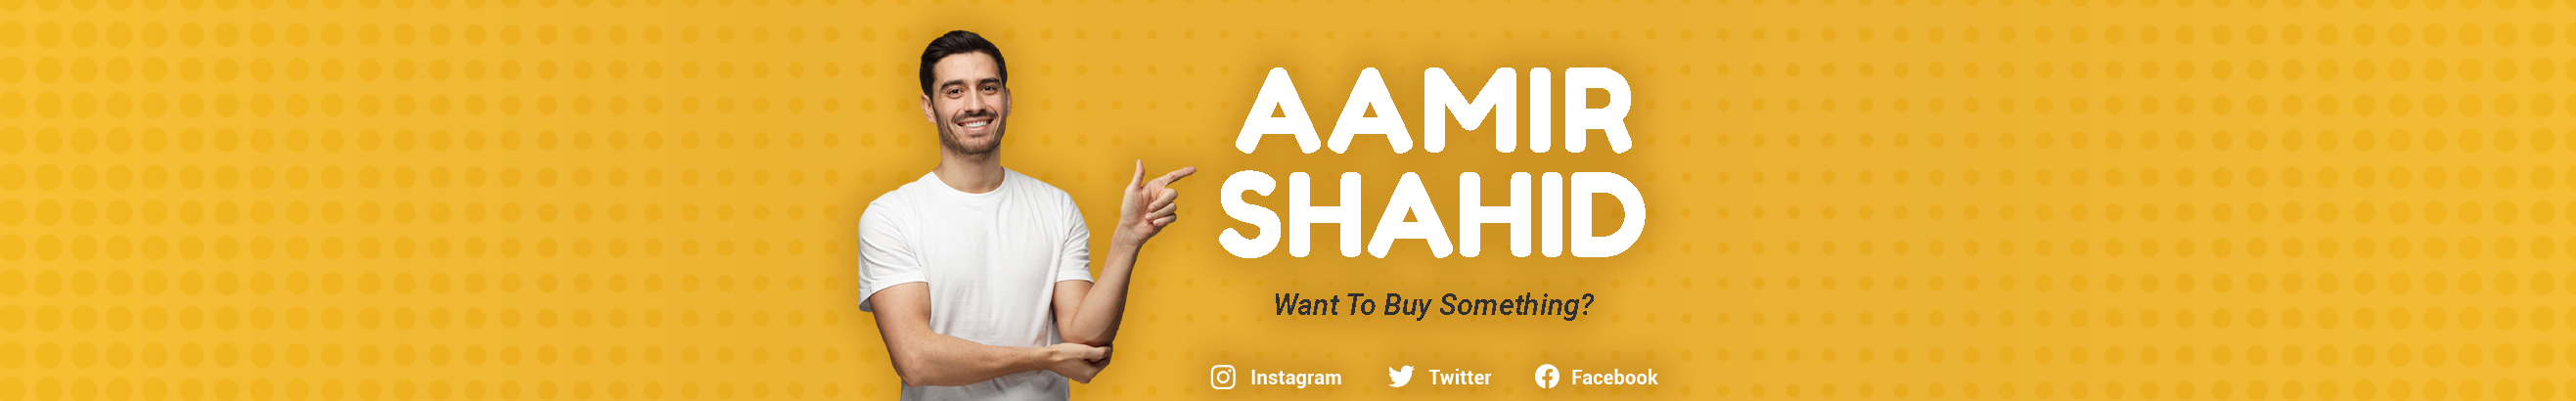 Aamir Shahid's profile banner